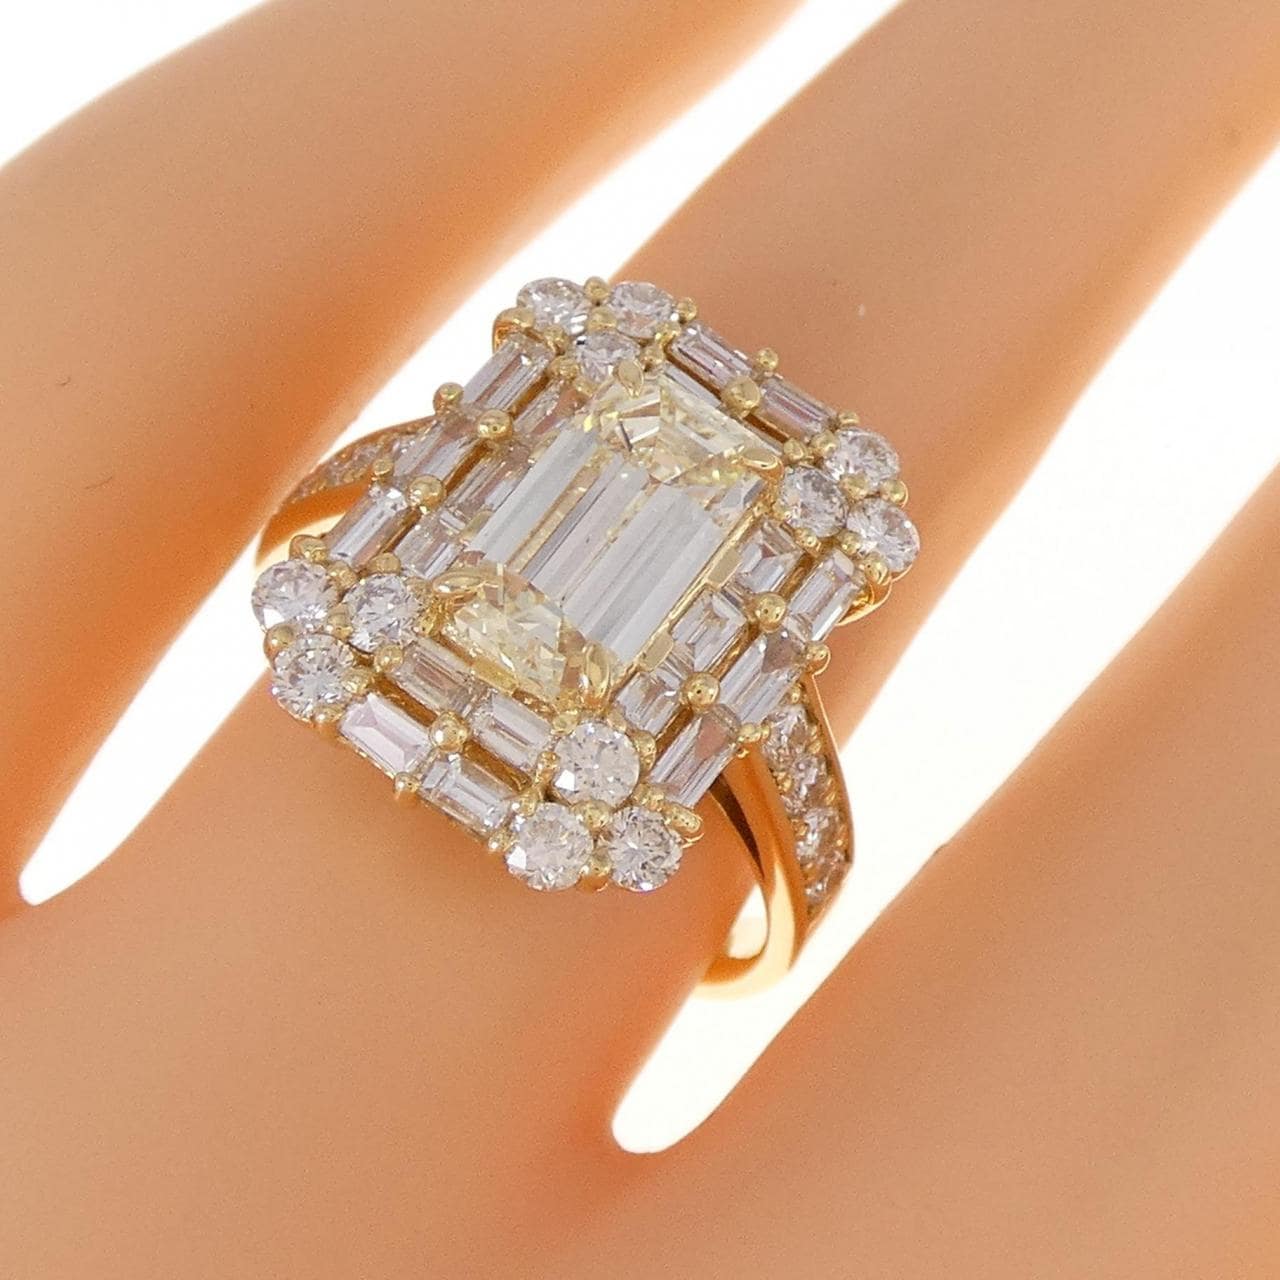 [Remake] K18YG Diamond ring 1.568CT LY VS2 emerald cut